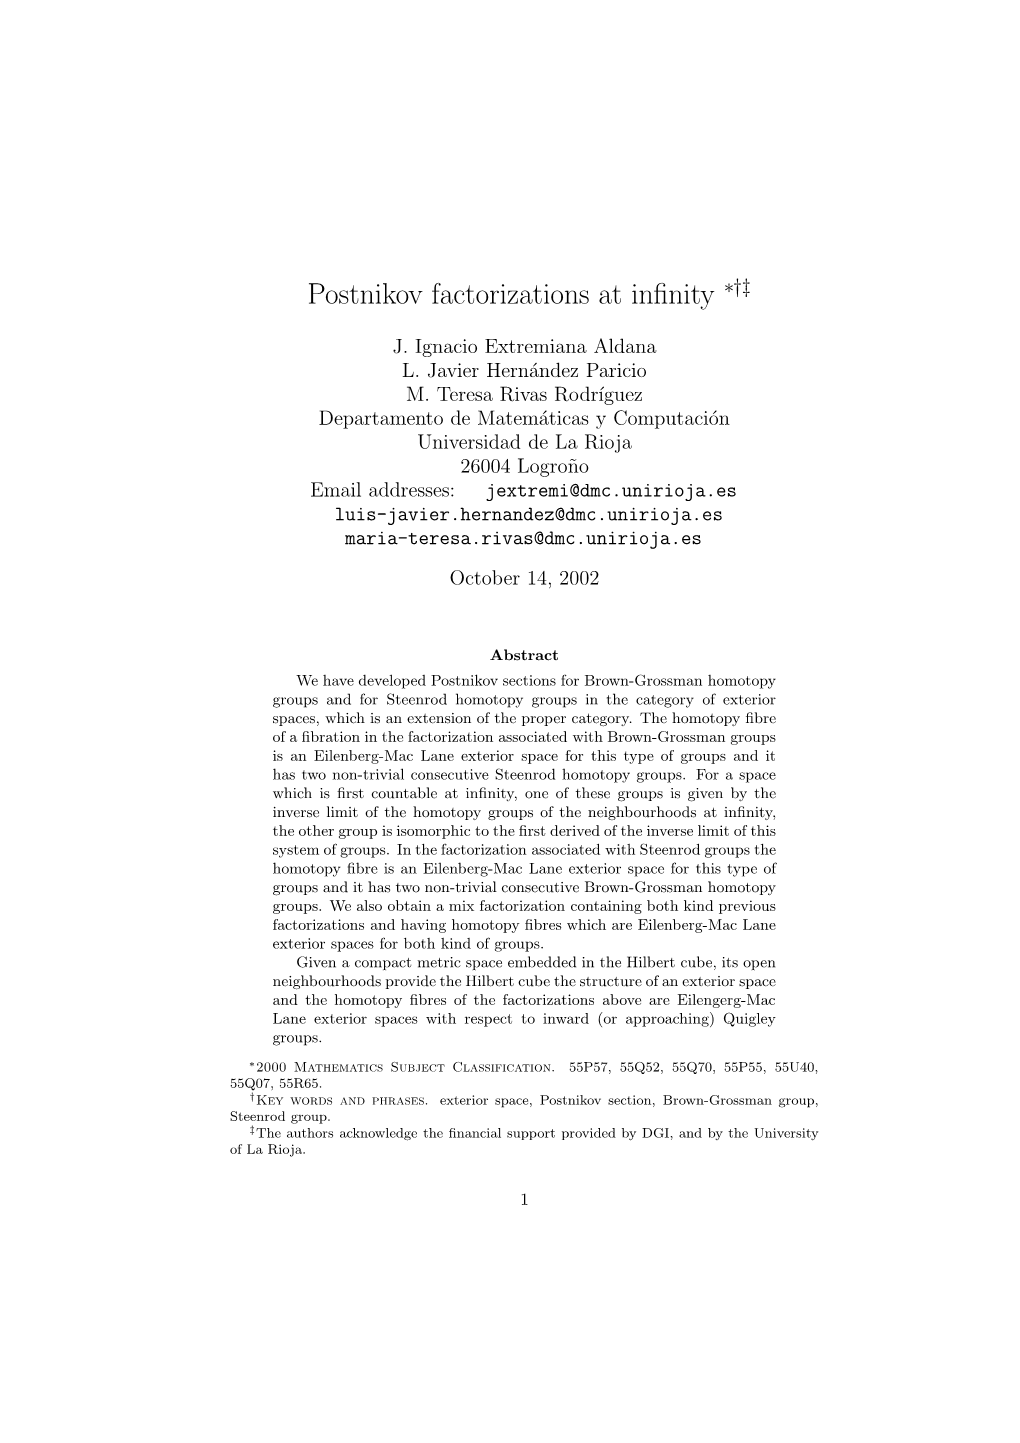 Postnikov Factorizations at Infinity